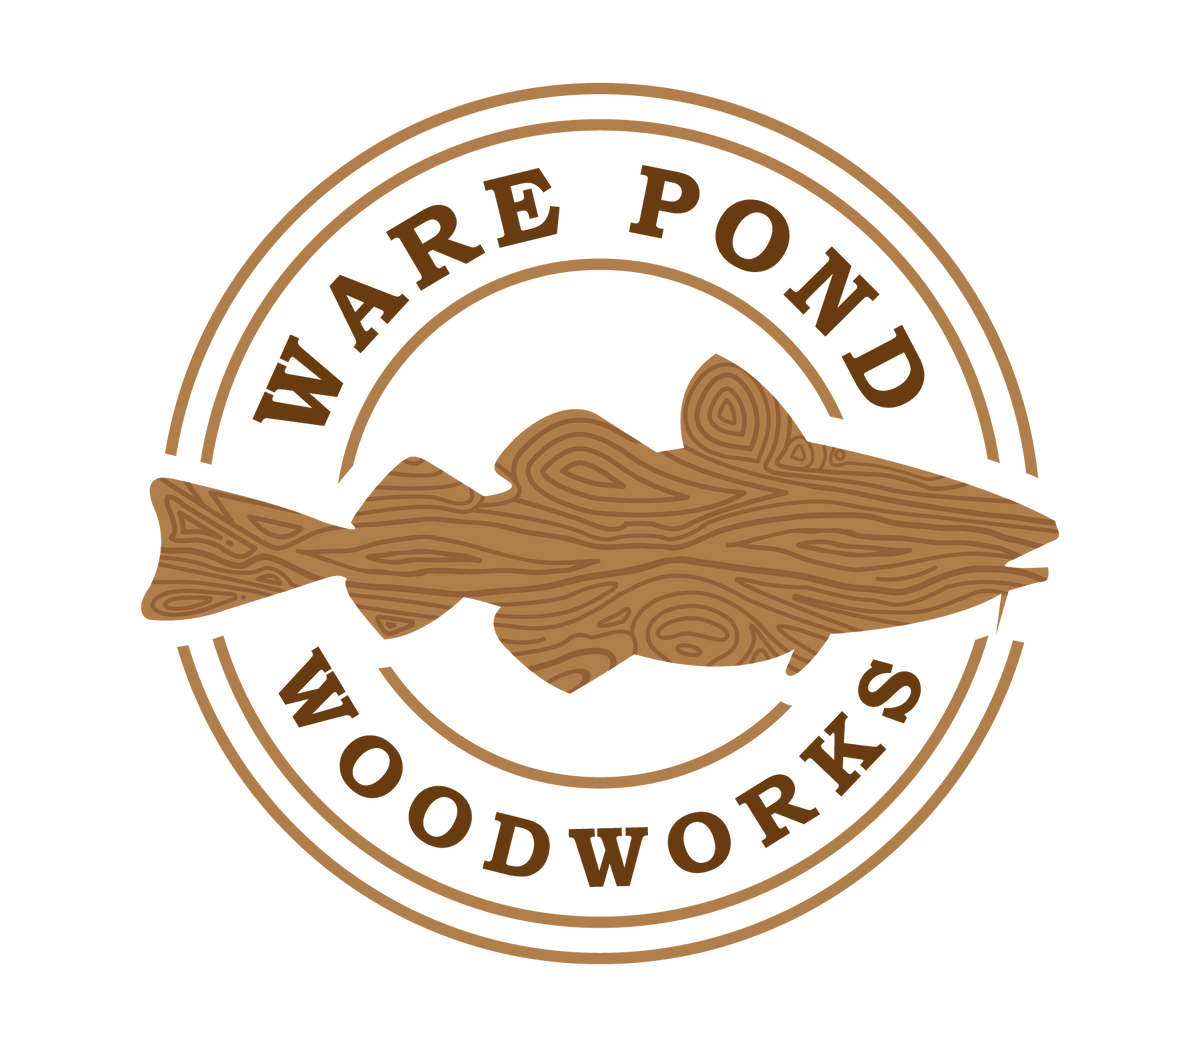 Ware Pond Woodworks